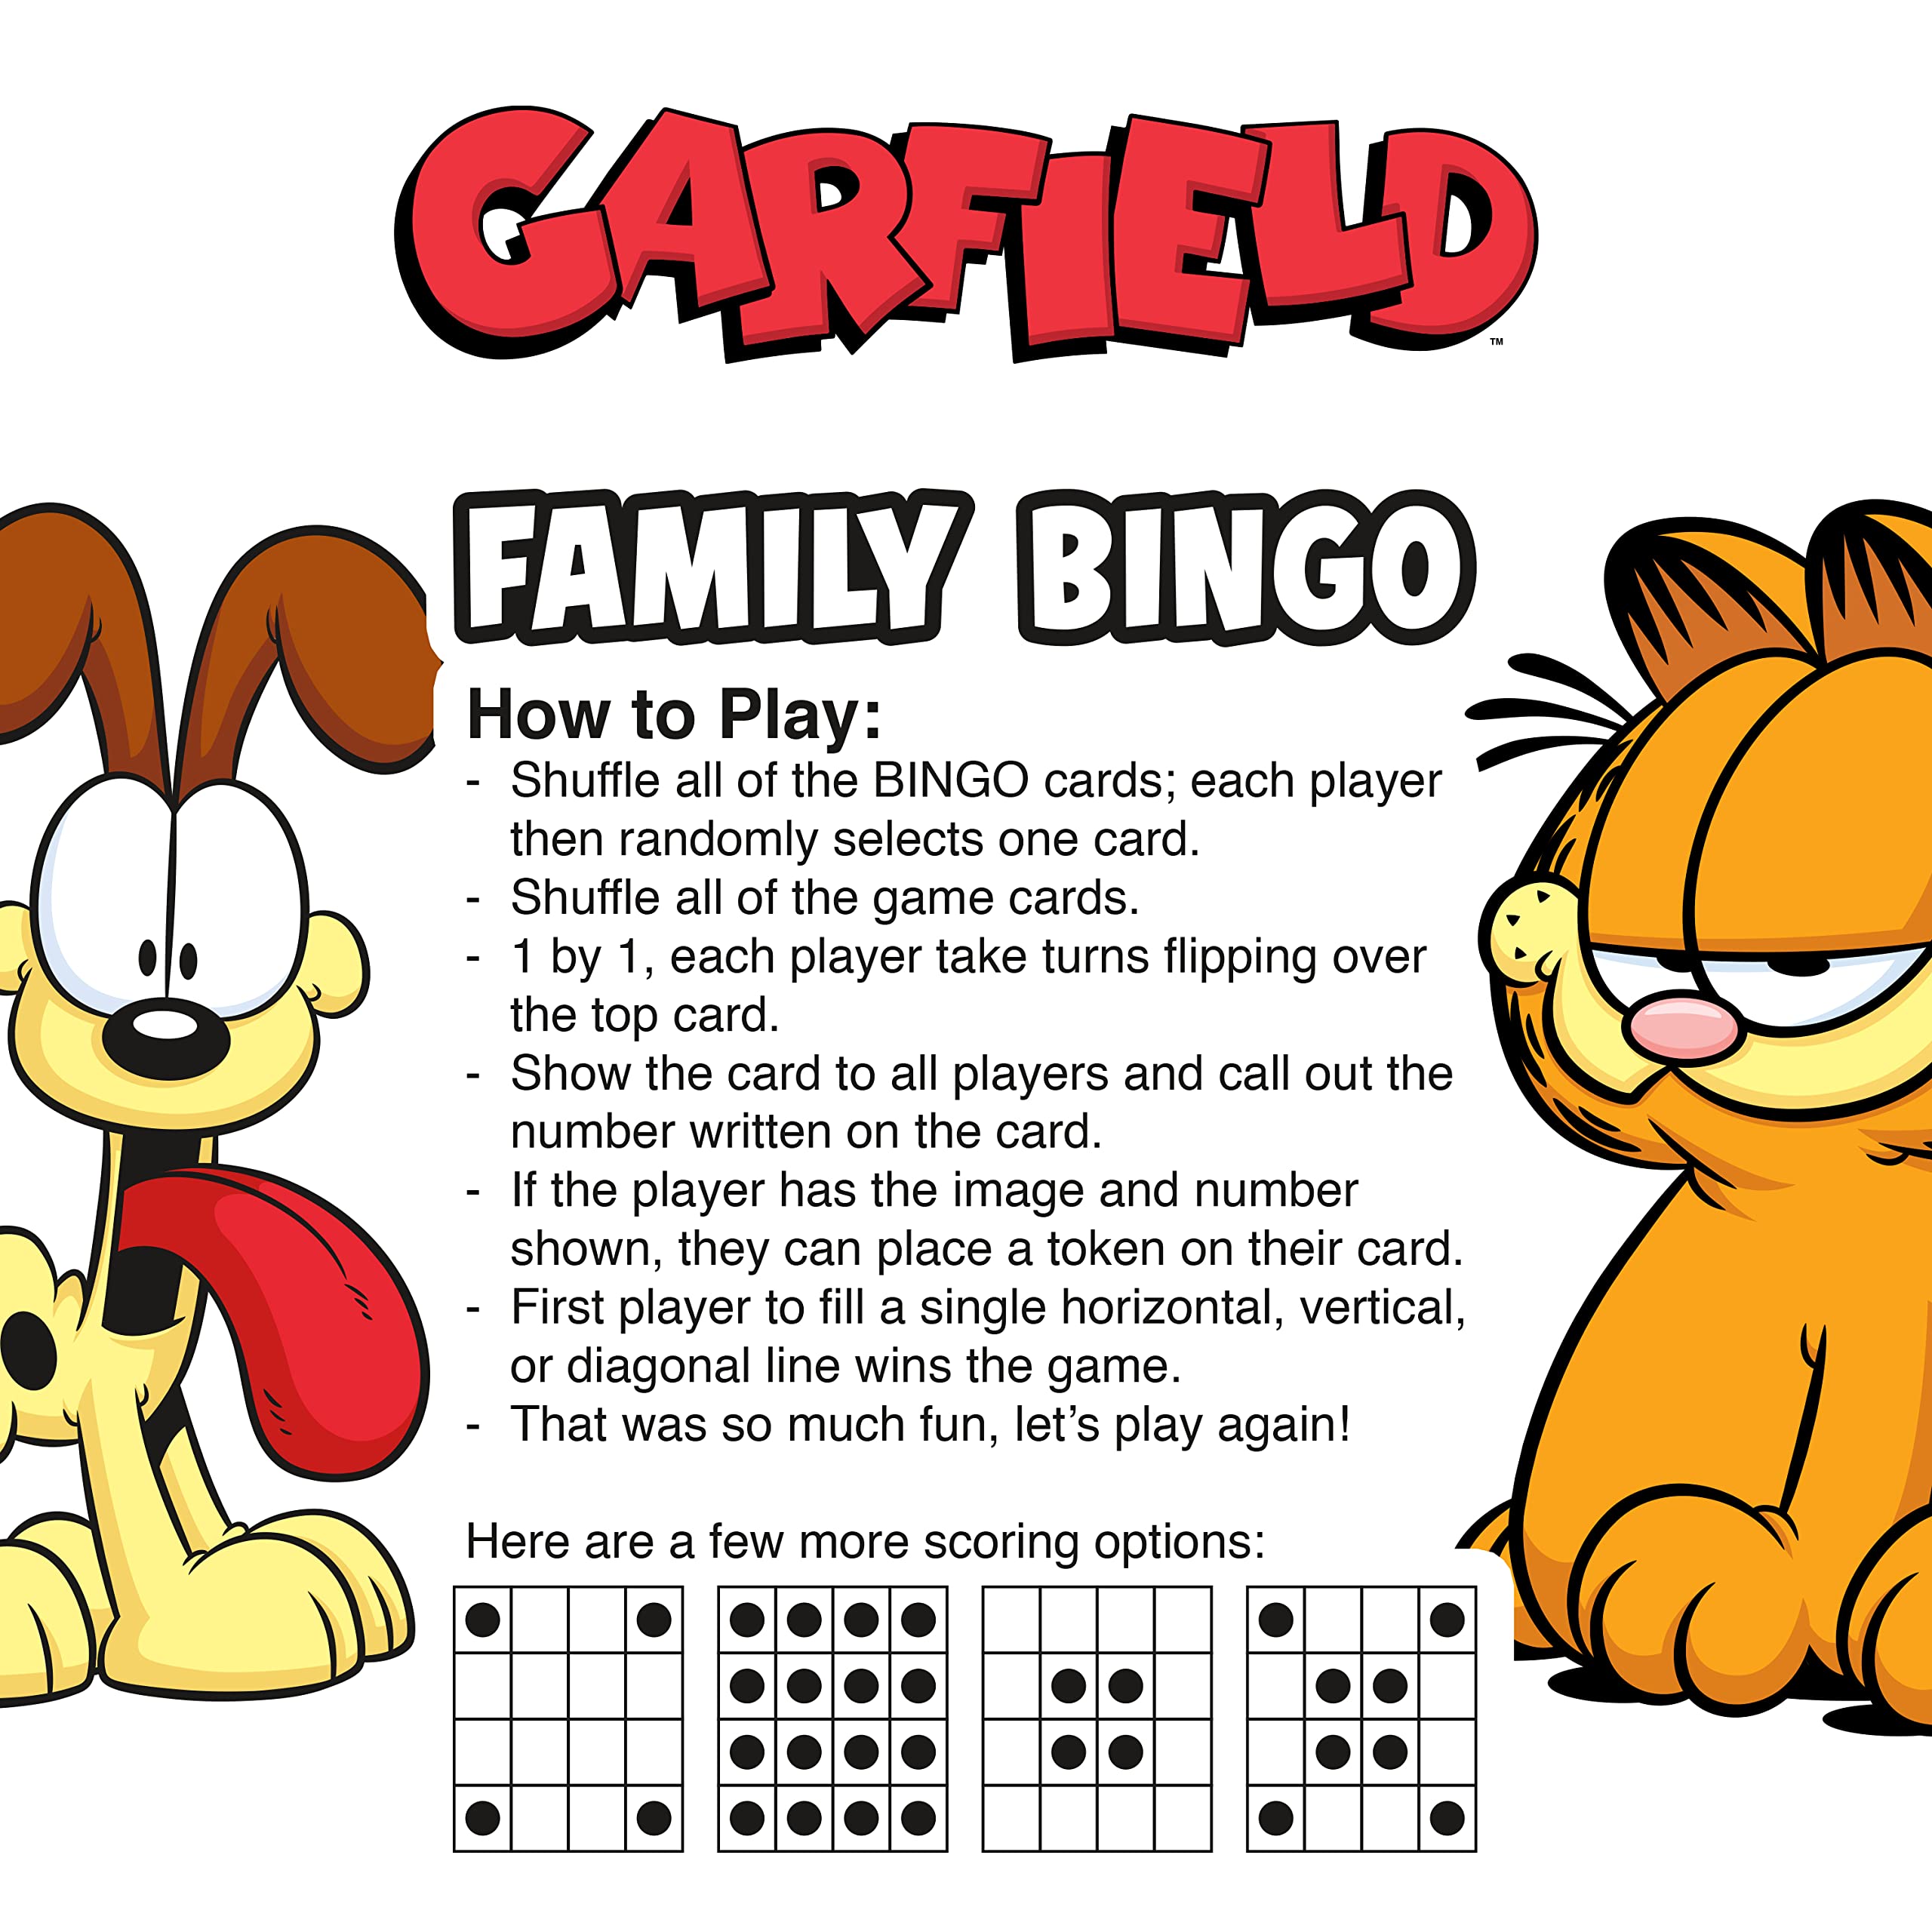 AQUARIUS - Garfield Family Bingo Game